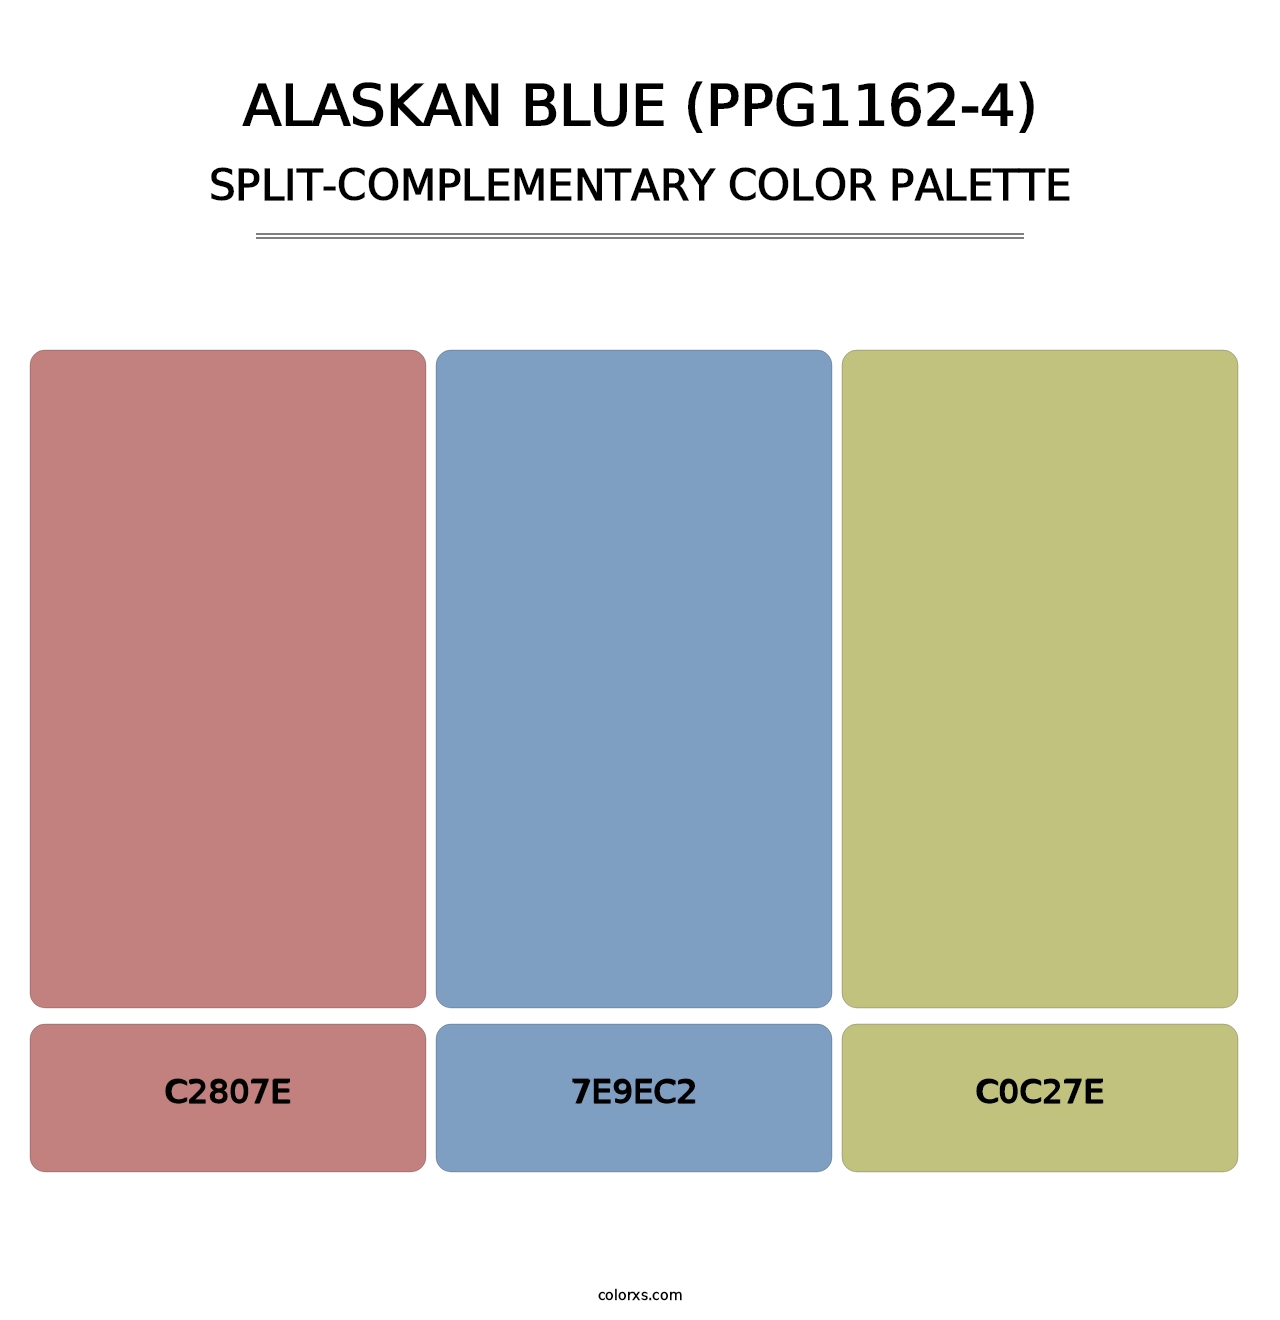 Alaskan Blue (PPG1162-4) - Split-Complementary Color Palette